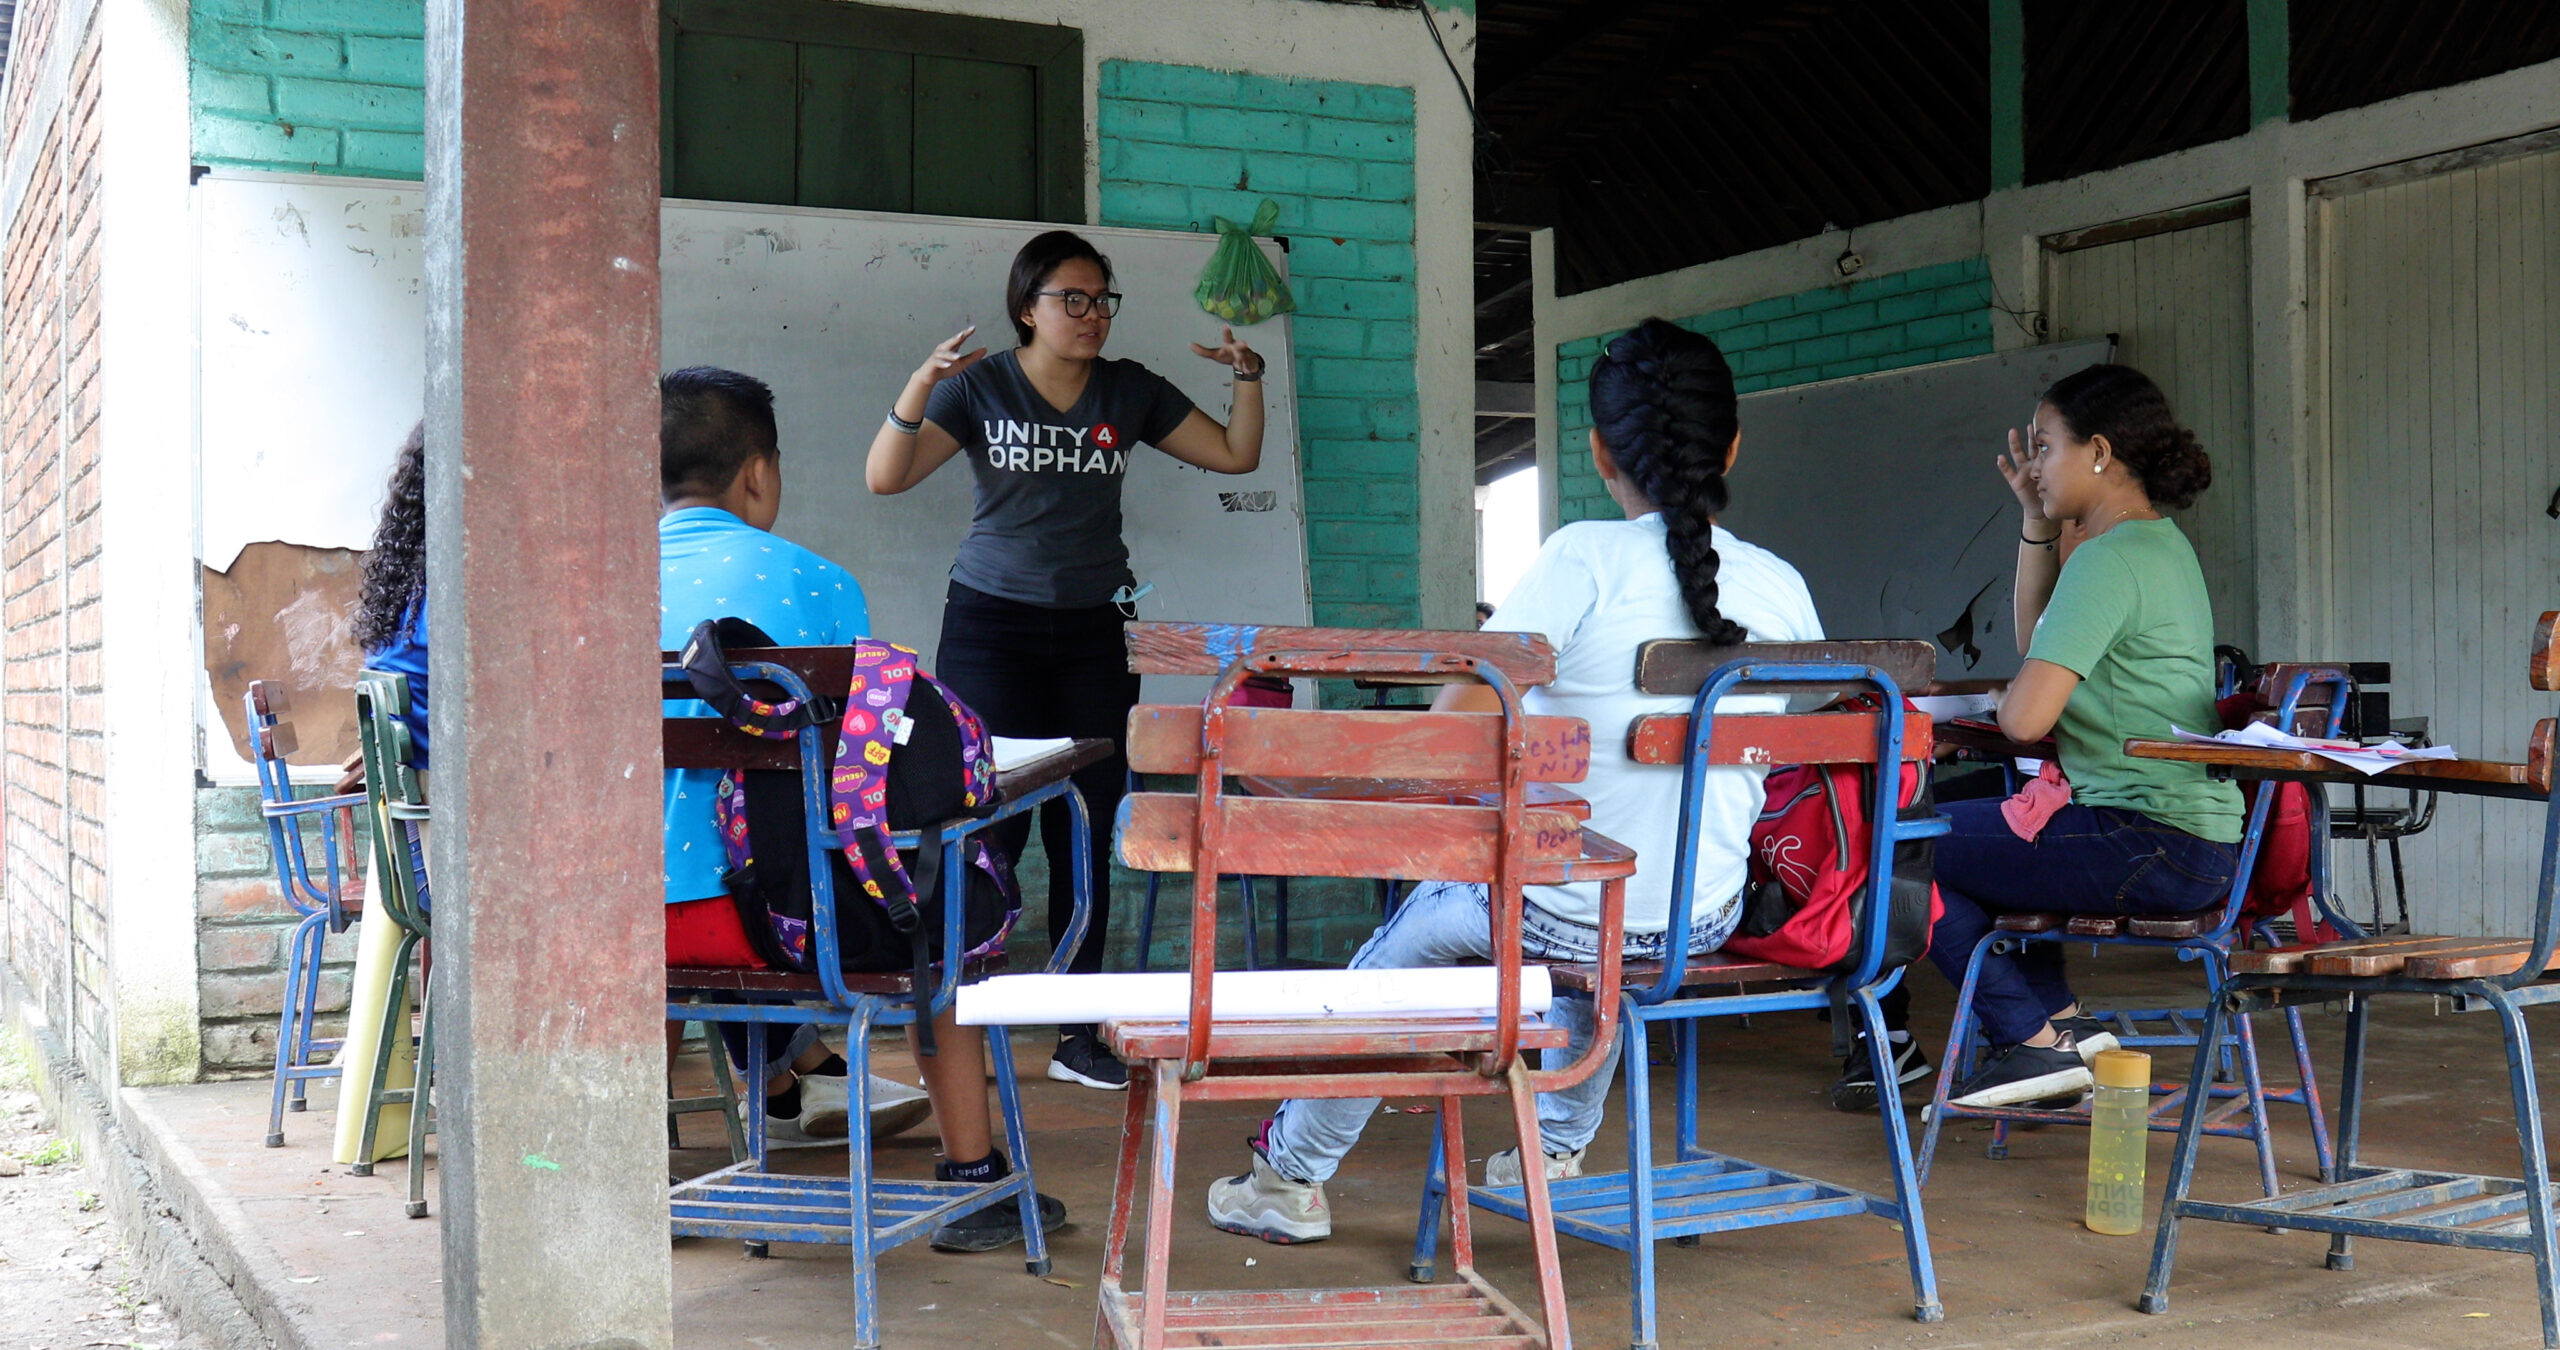 San Diego charity Unity 4 Orphans volunteer teaching children in Nicaragua